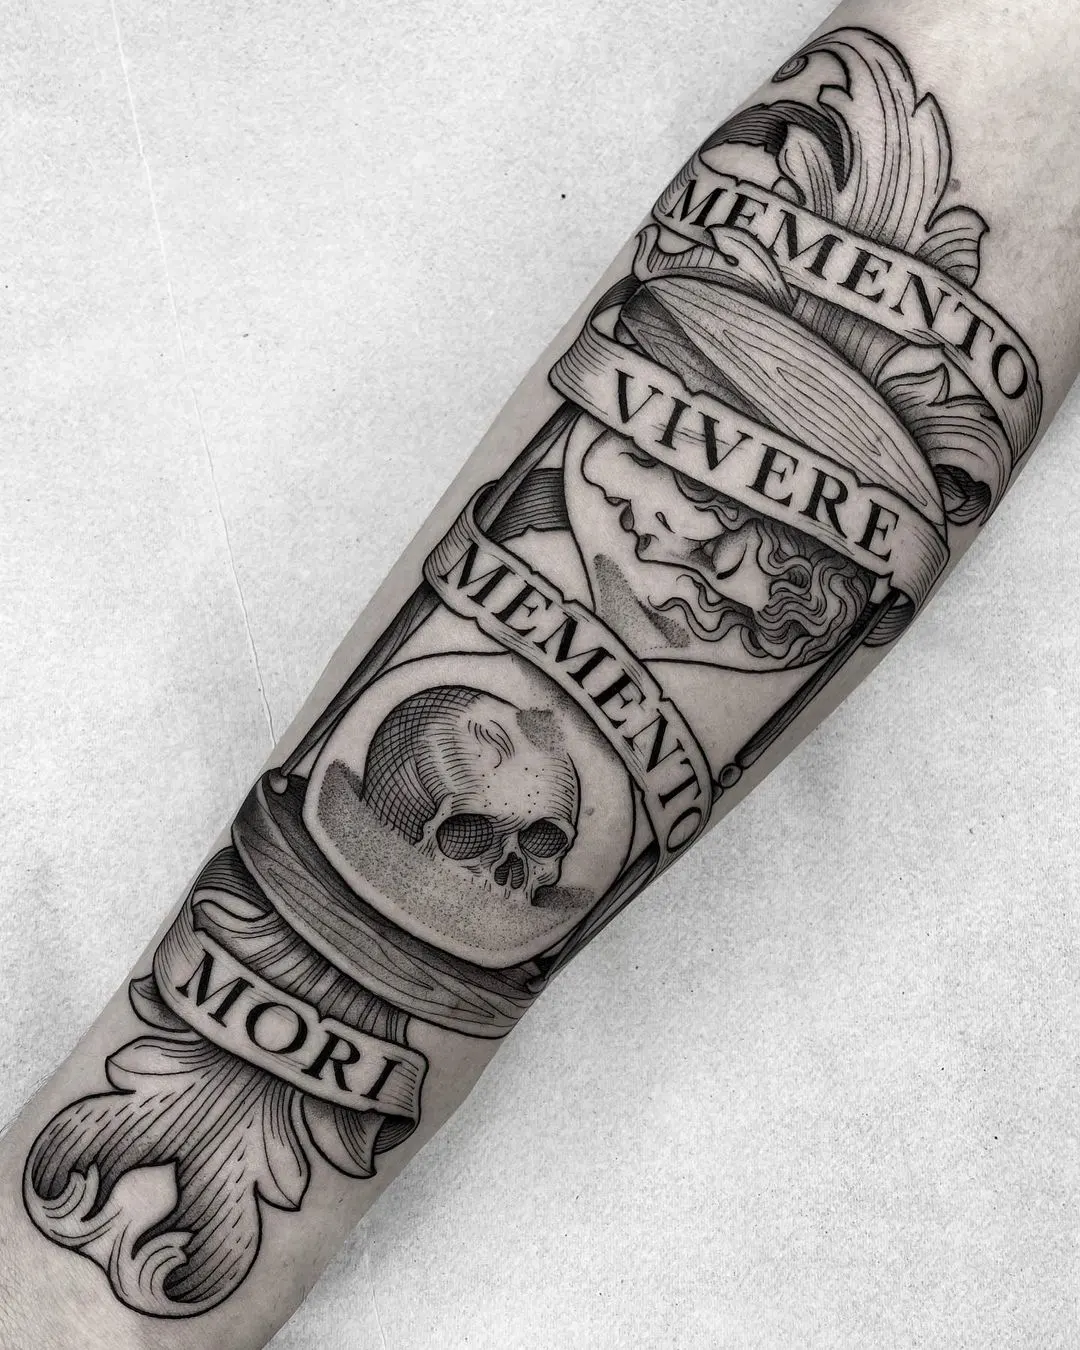 Forearm Memento Mori tattoos